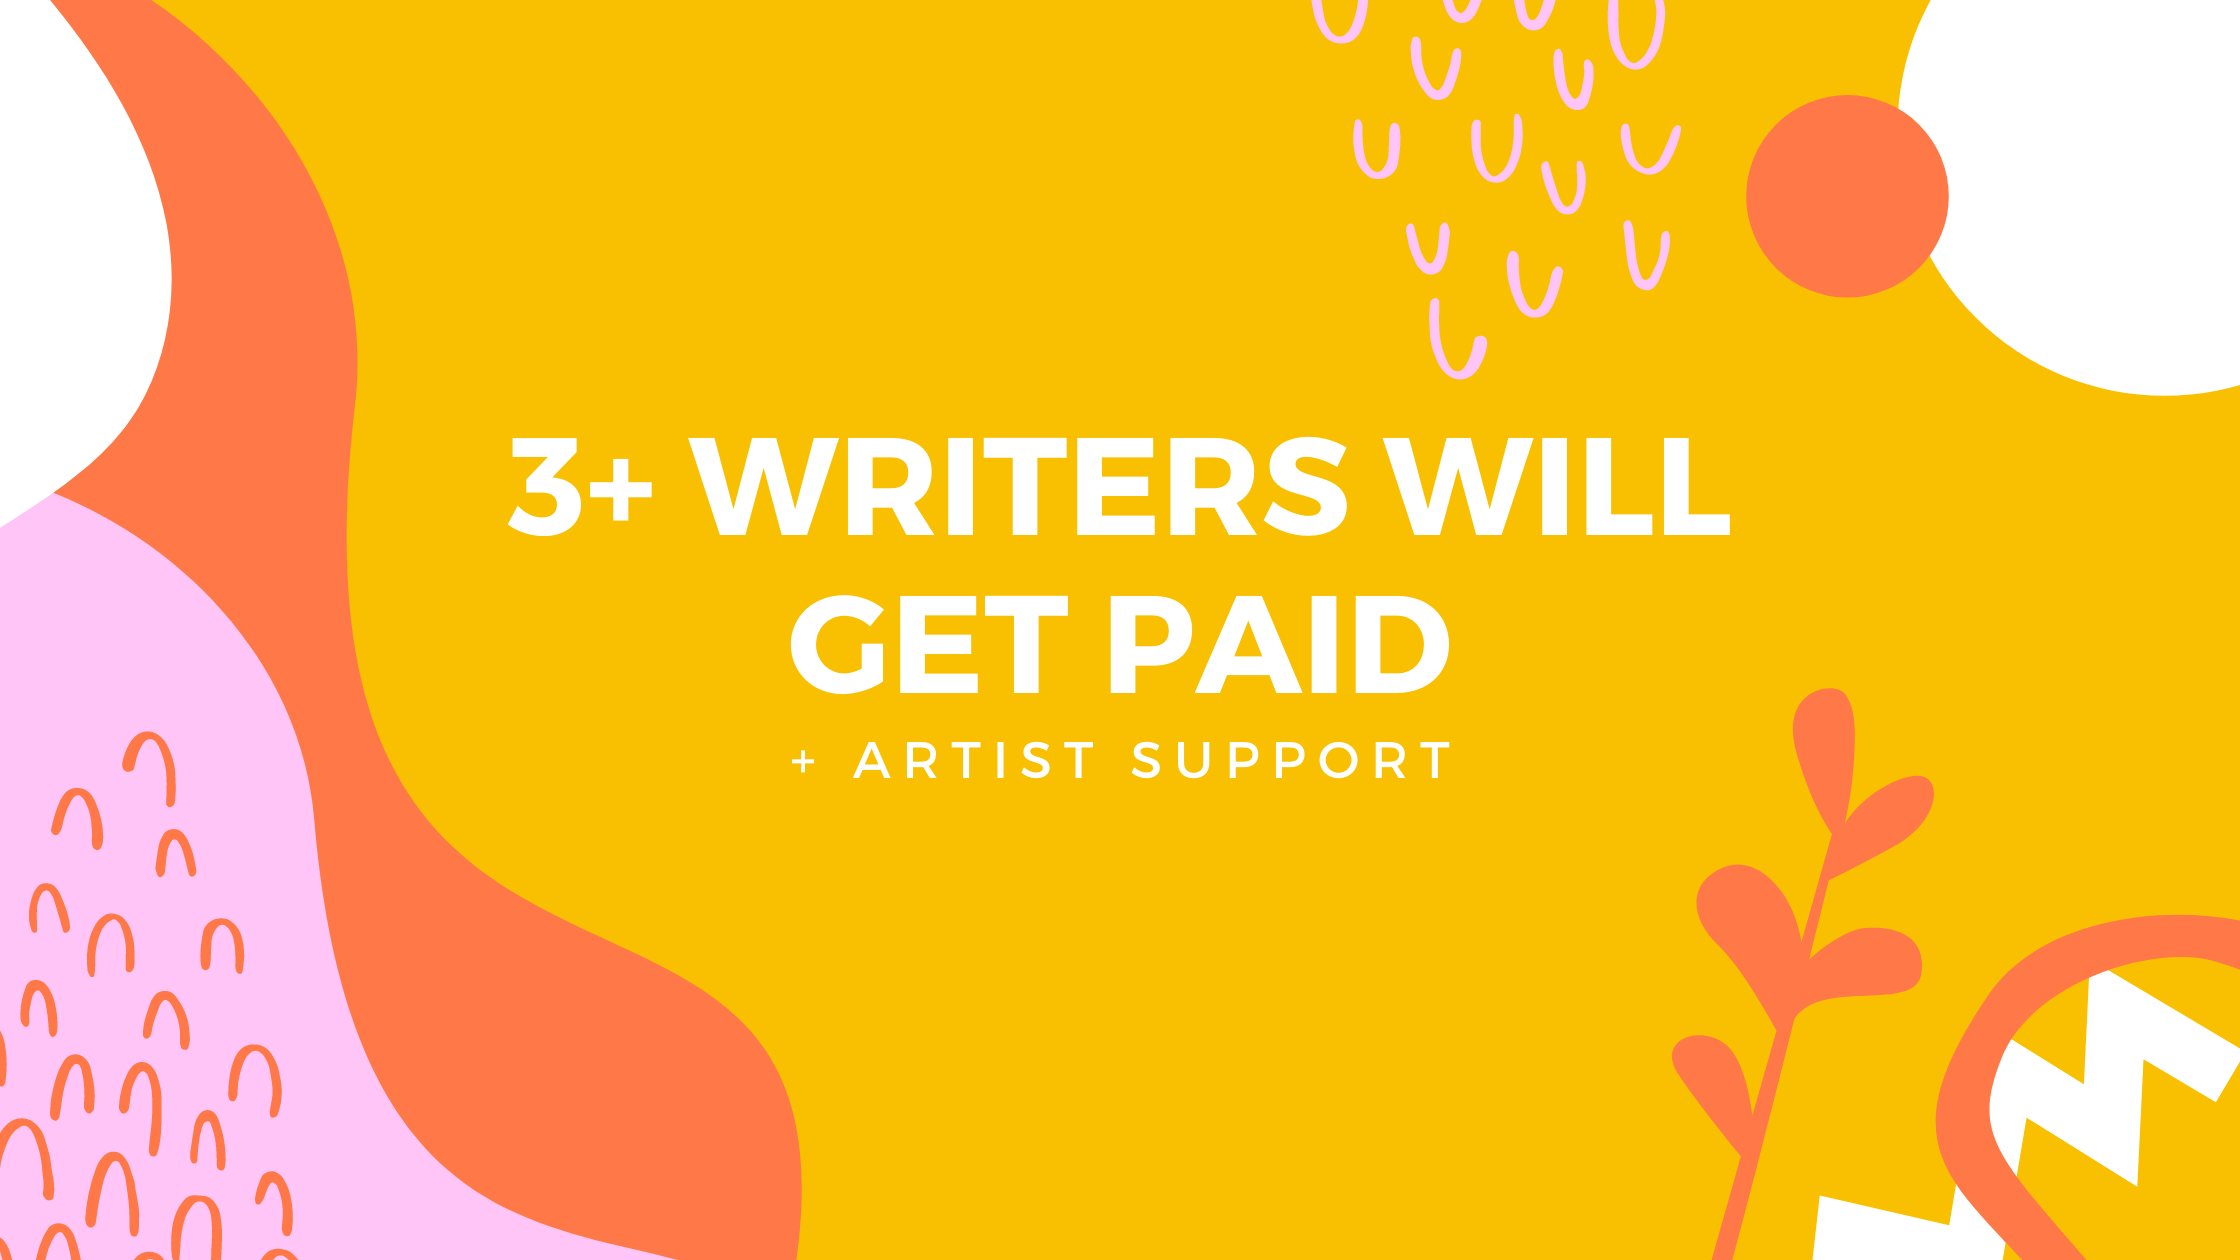 Goal met! 3+ Writers Get Paid, Plus Artist Support